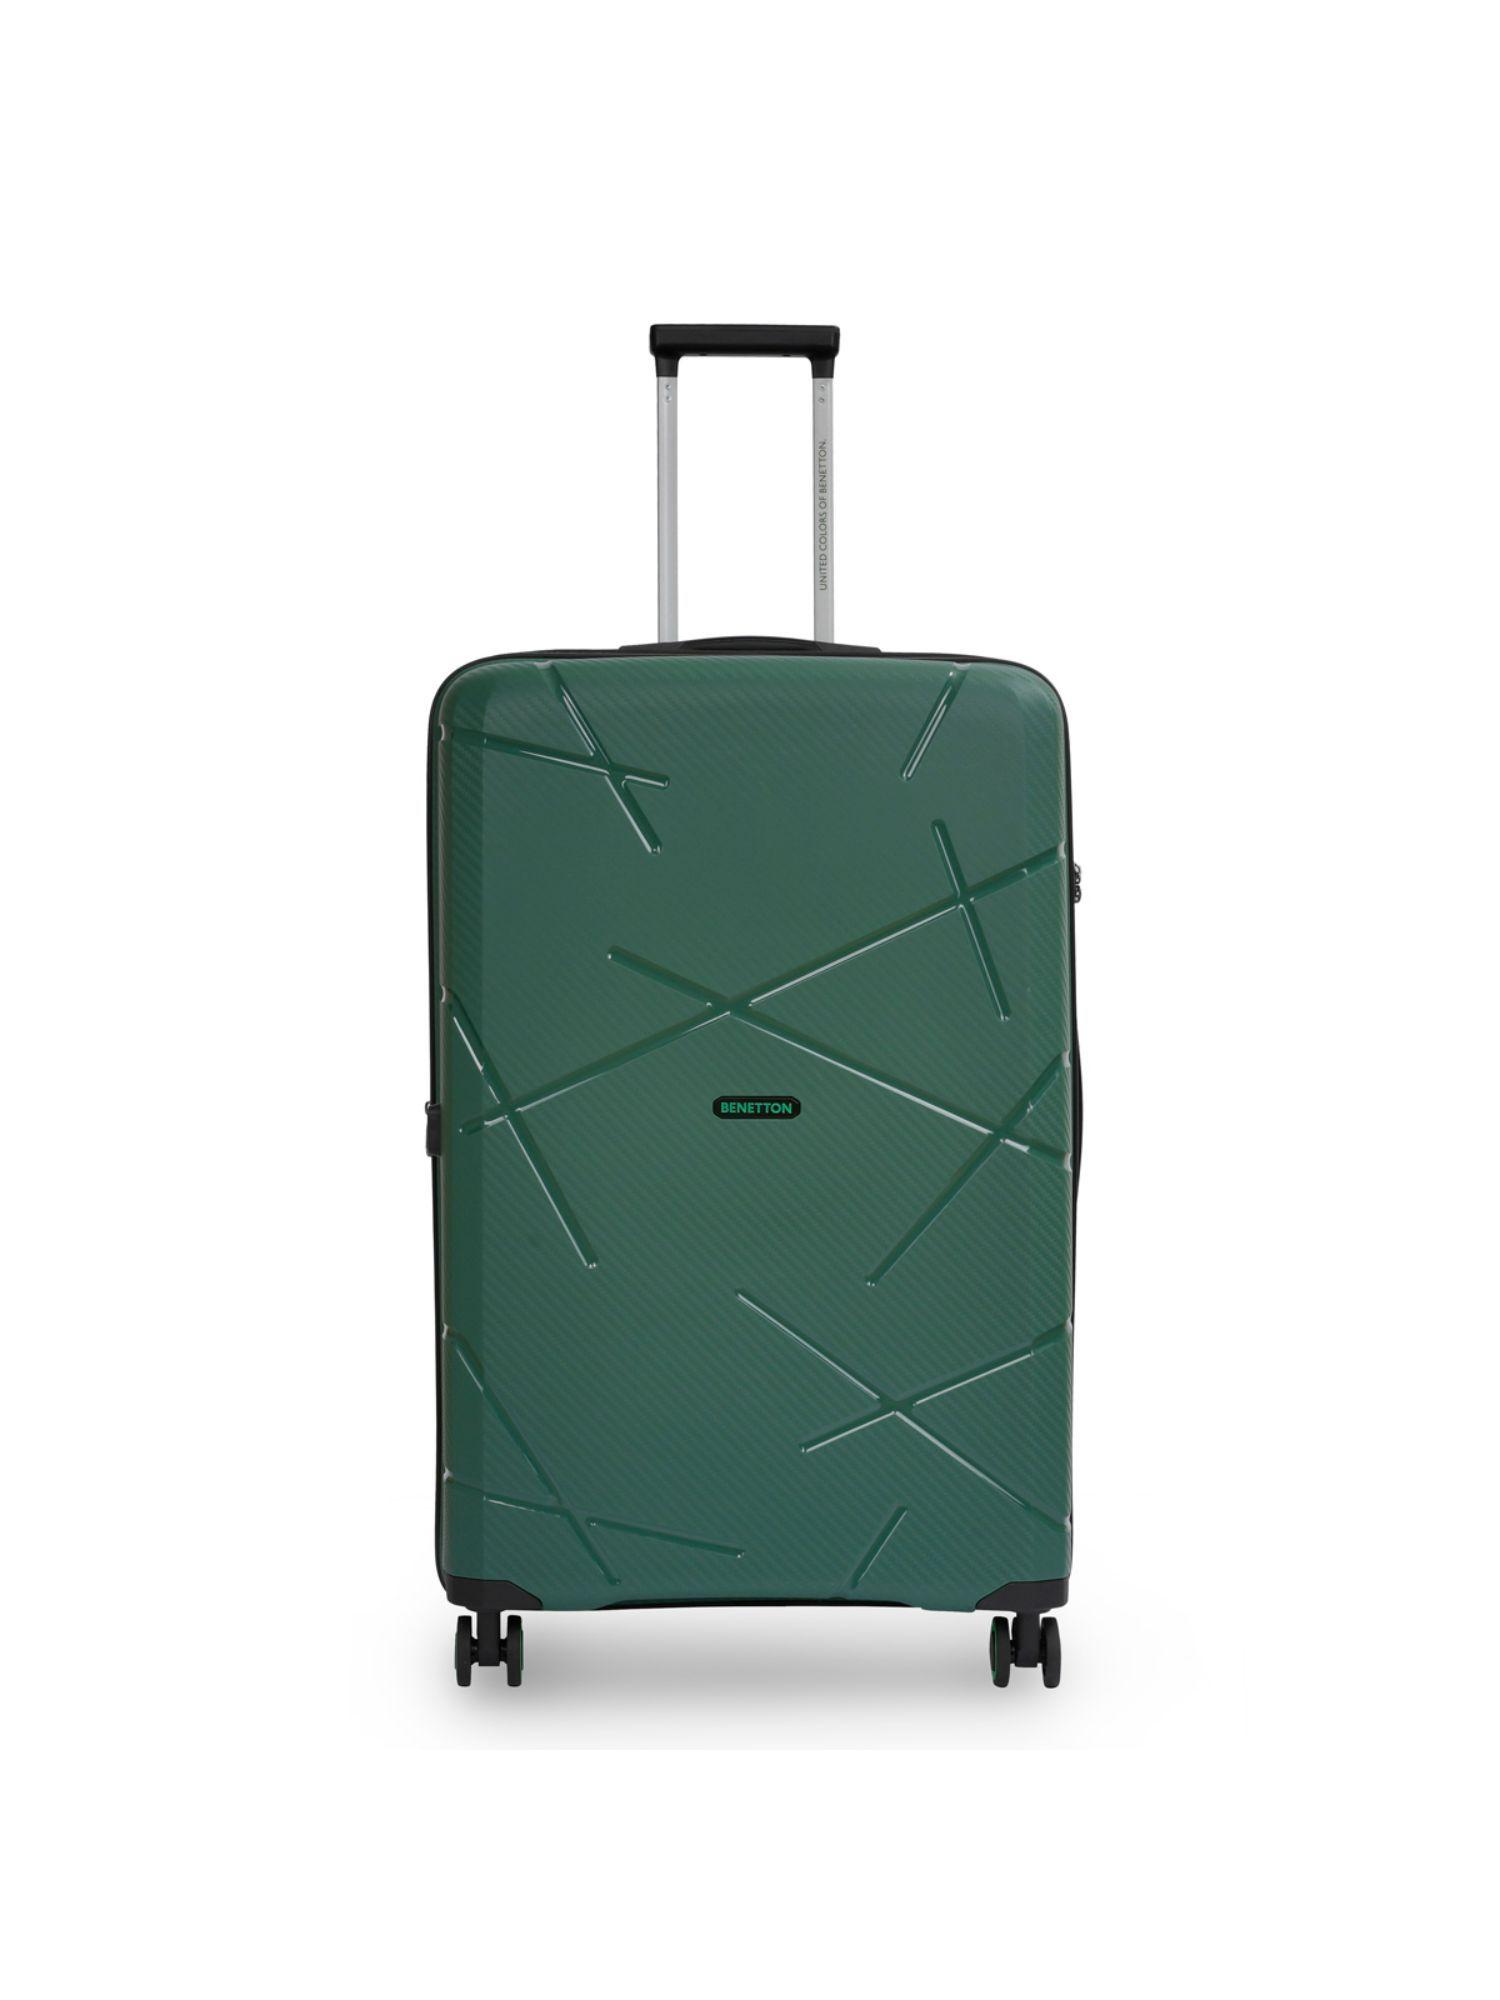 moonstone unisex hard luggage green tsa lock trolley bag